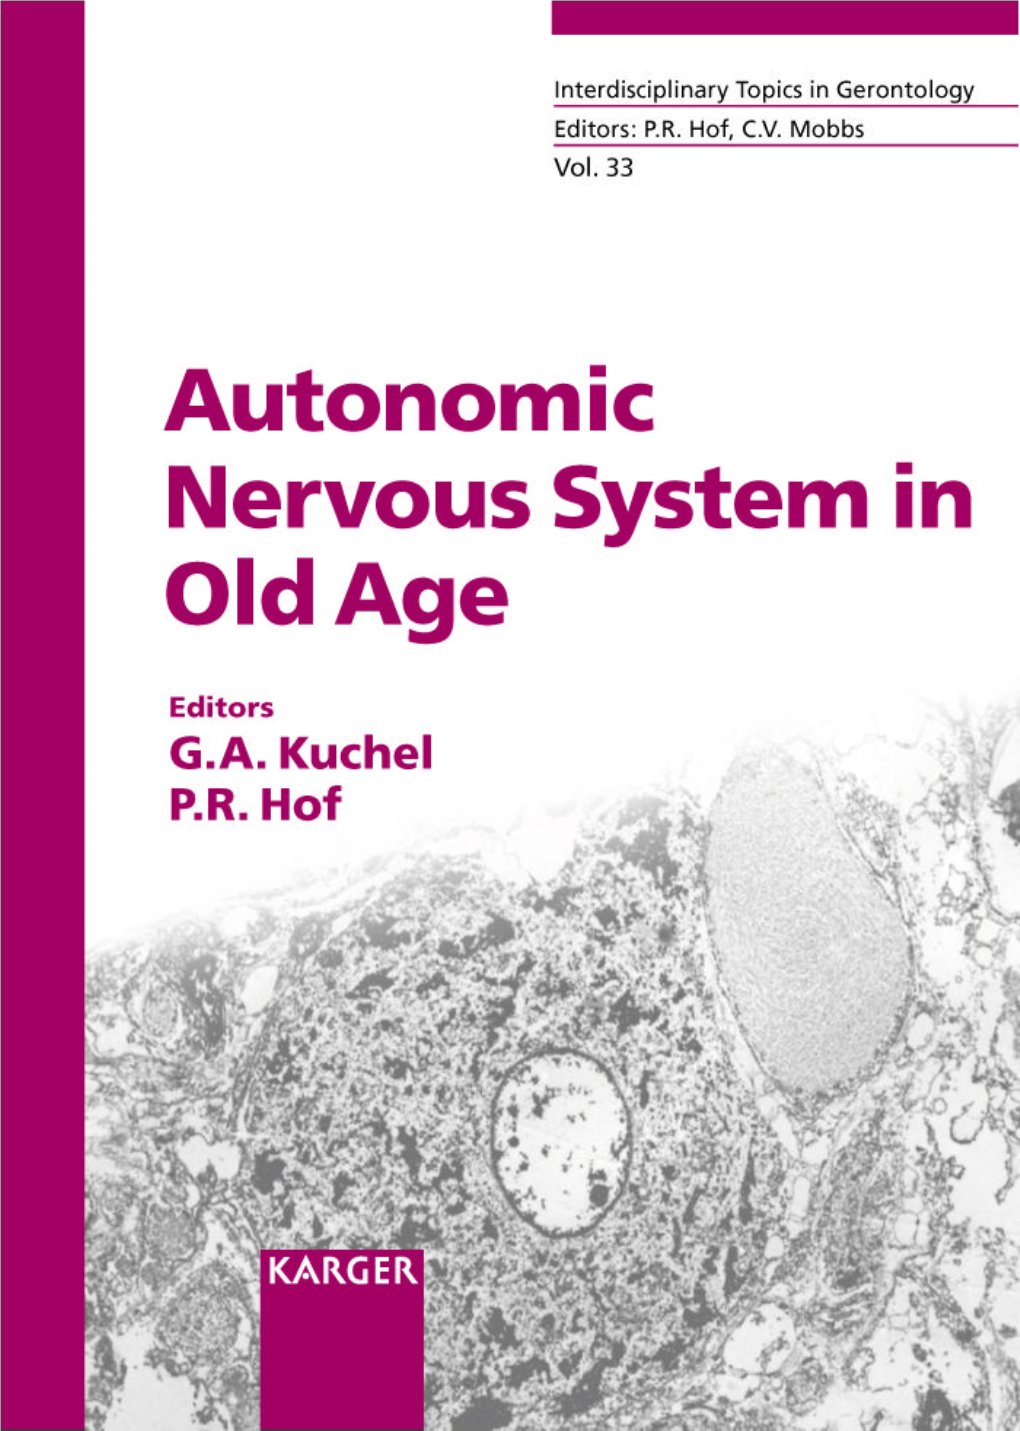 Aging of the Autonomic Nervous System